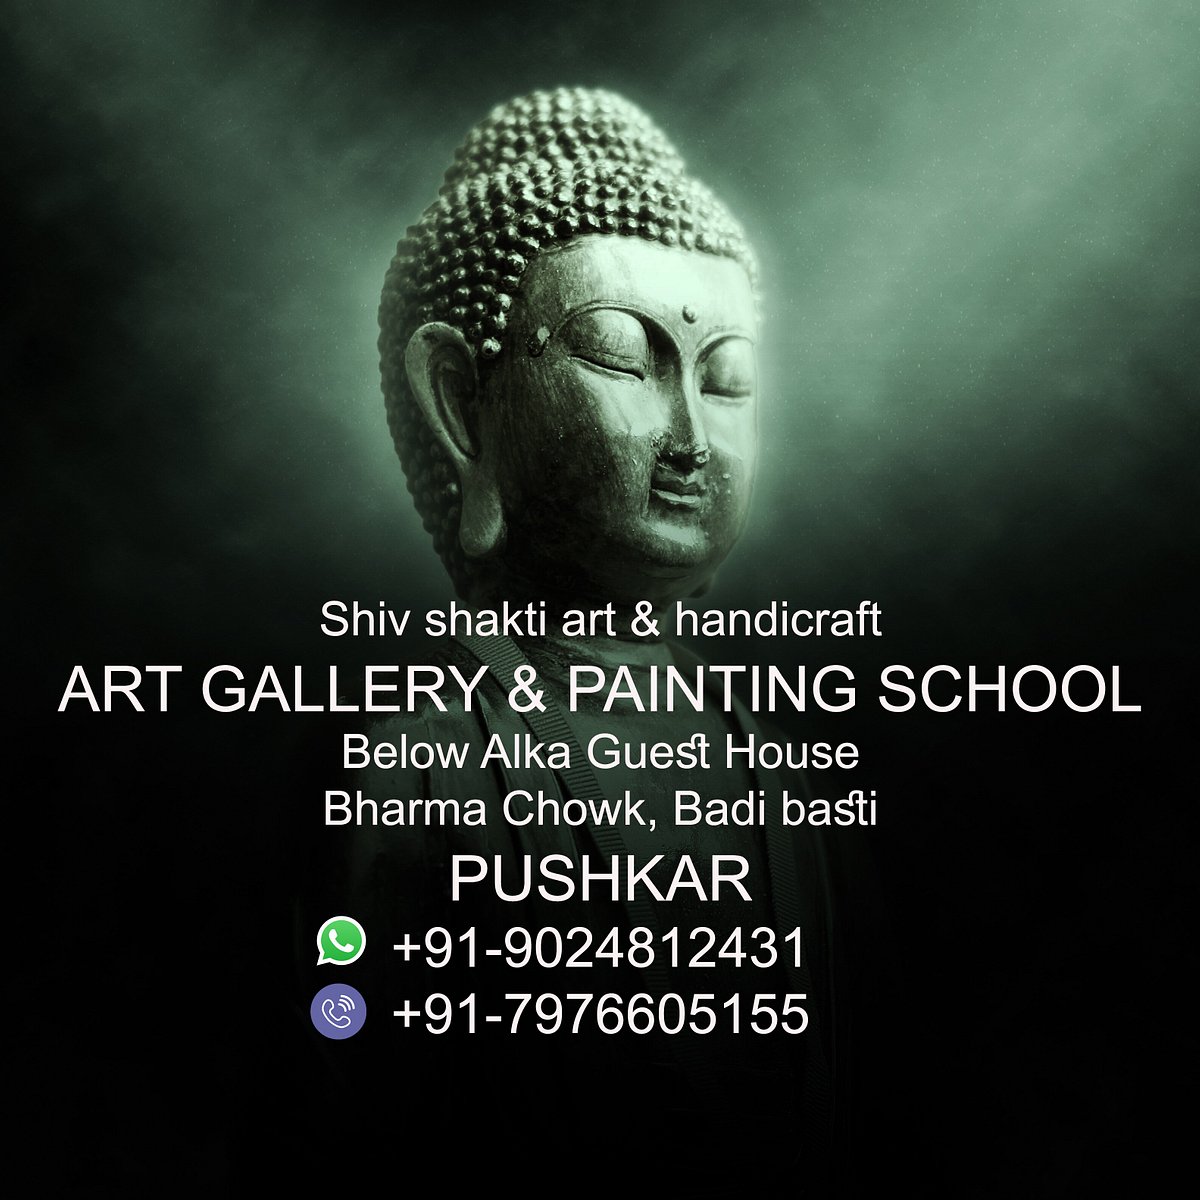 Shiv Shakti Art & Handicraft (Pushkar) - All You Need to Know ...